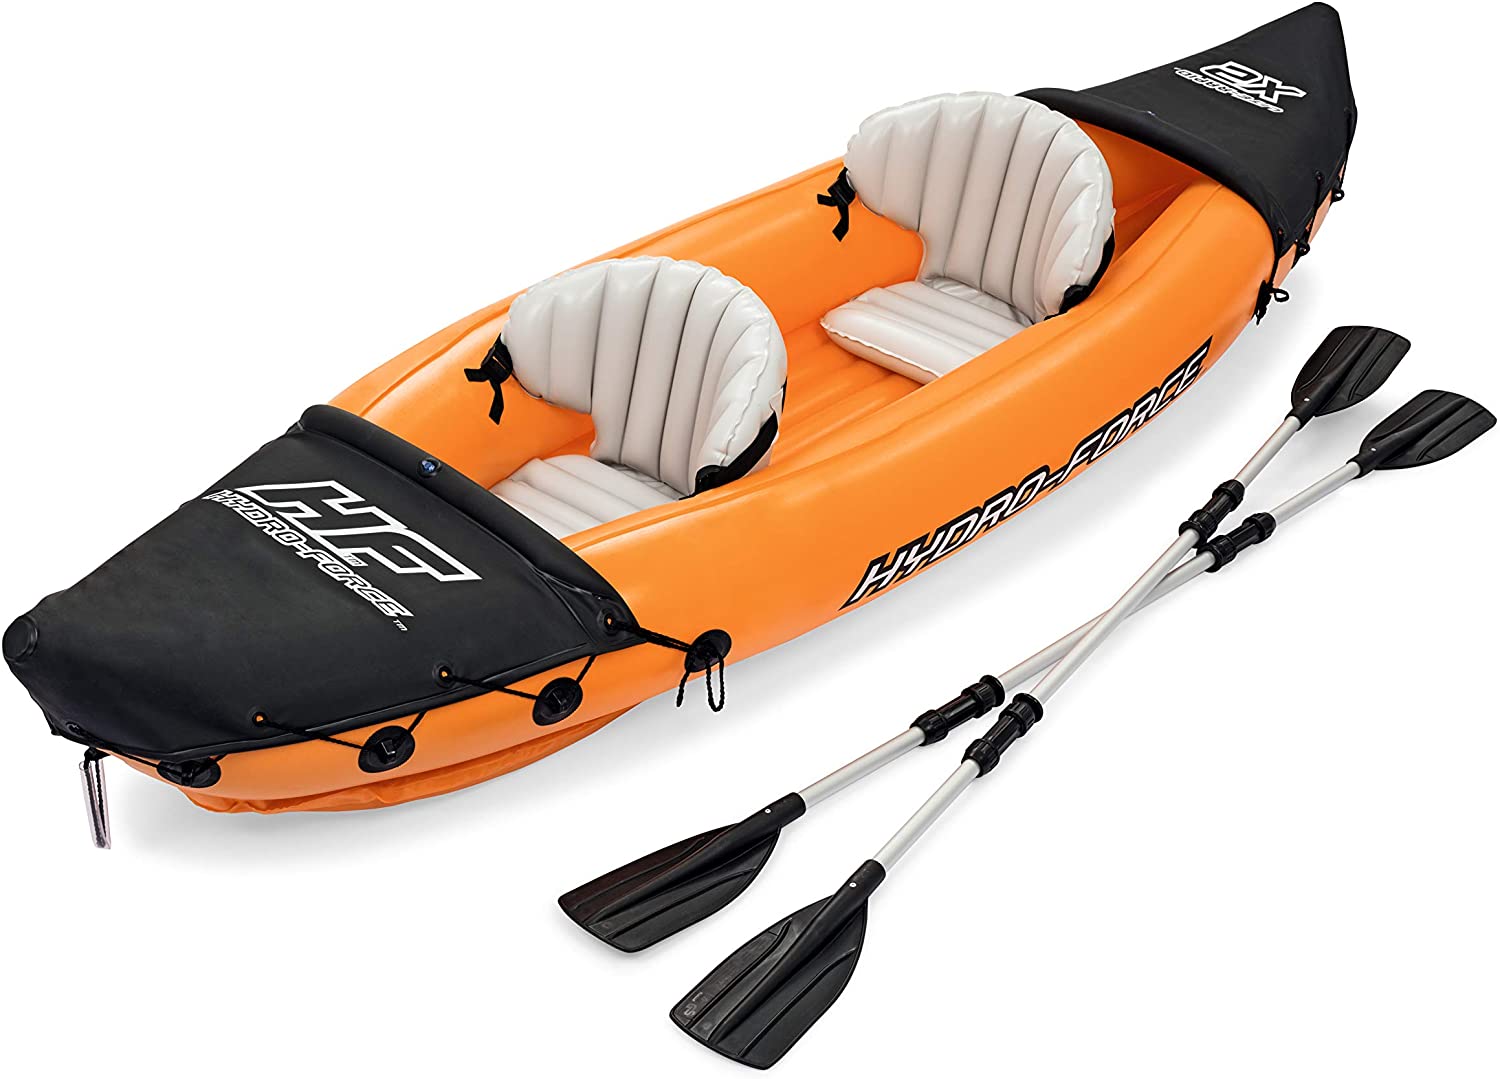 Hydro-Force Lite Rapid X2 inflatable kayak